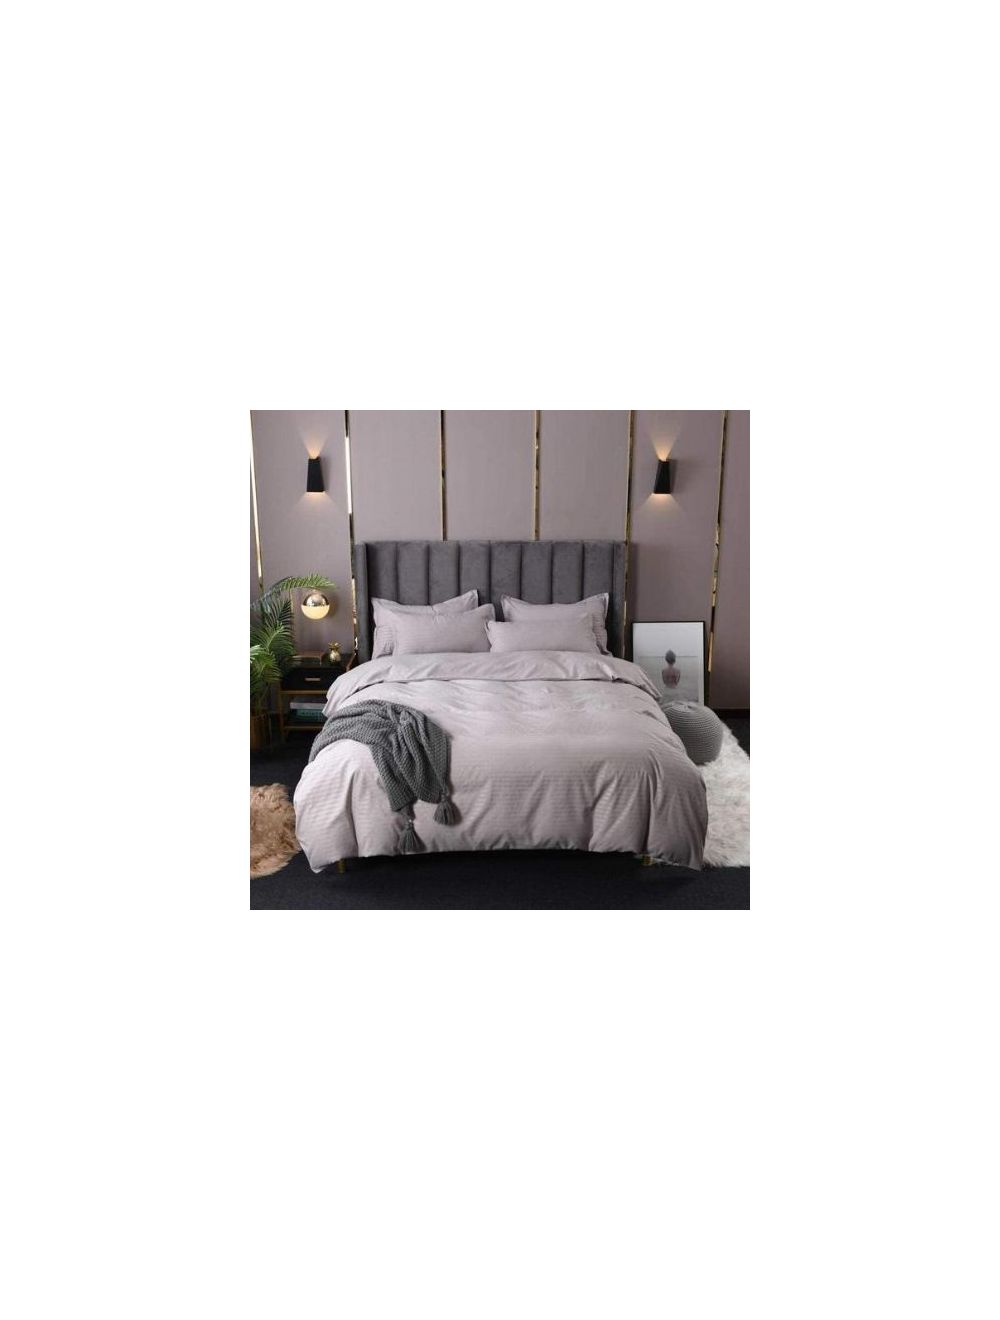 DEALS FOR LESS - King Size Bedding Set Of 6 Pieces, Plain Gray Striped Design.-hz14-28k